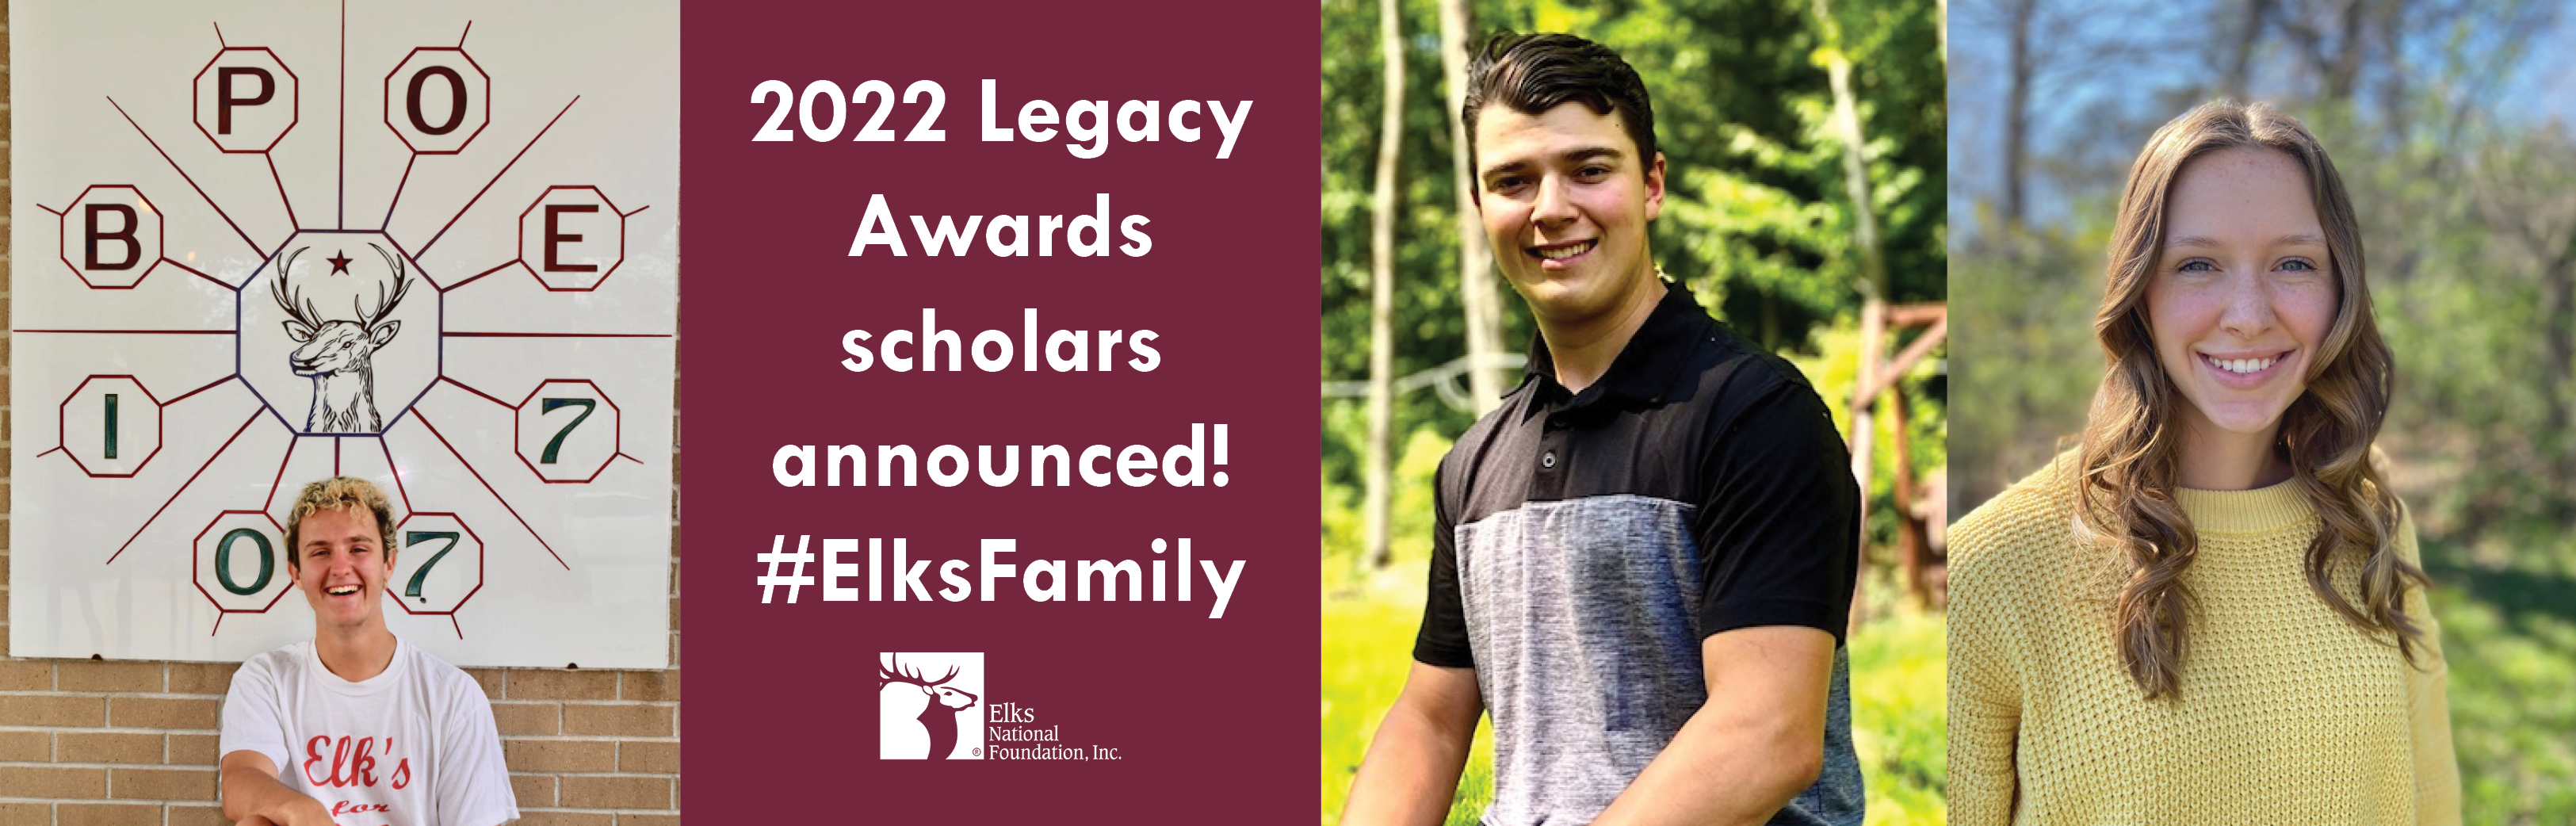 2022 Legacy Awards Scholars!